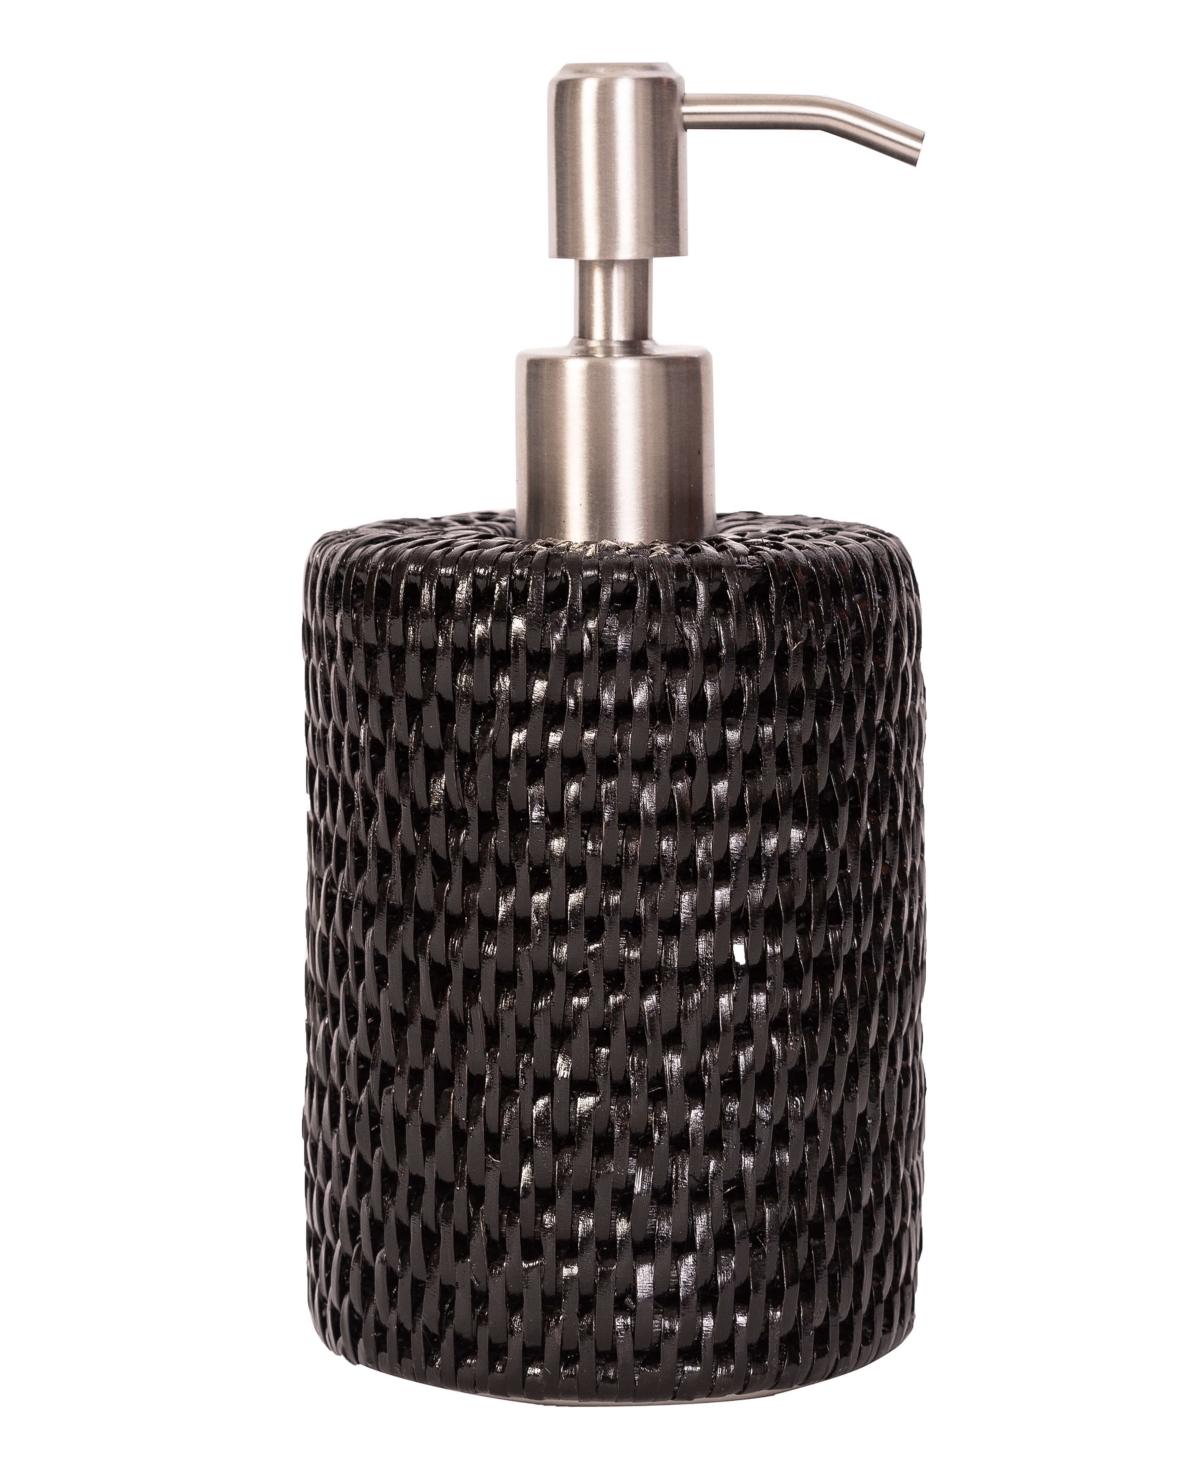 Artifacts Rattan Stainless Steel Polished Finish Soap Pump Dispenser - Tudor Black